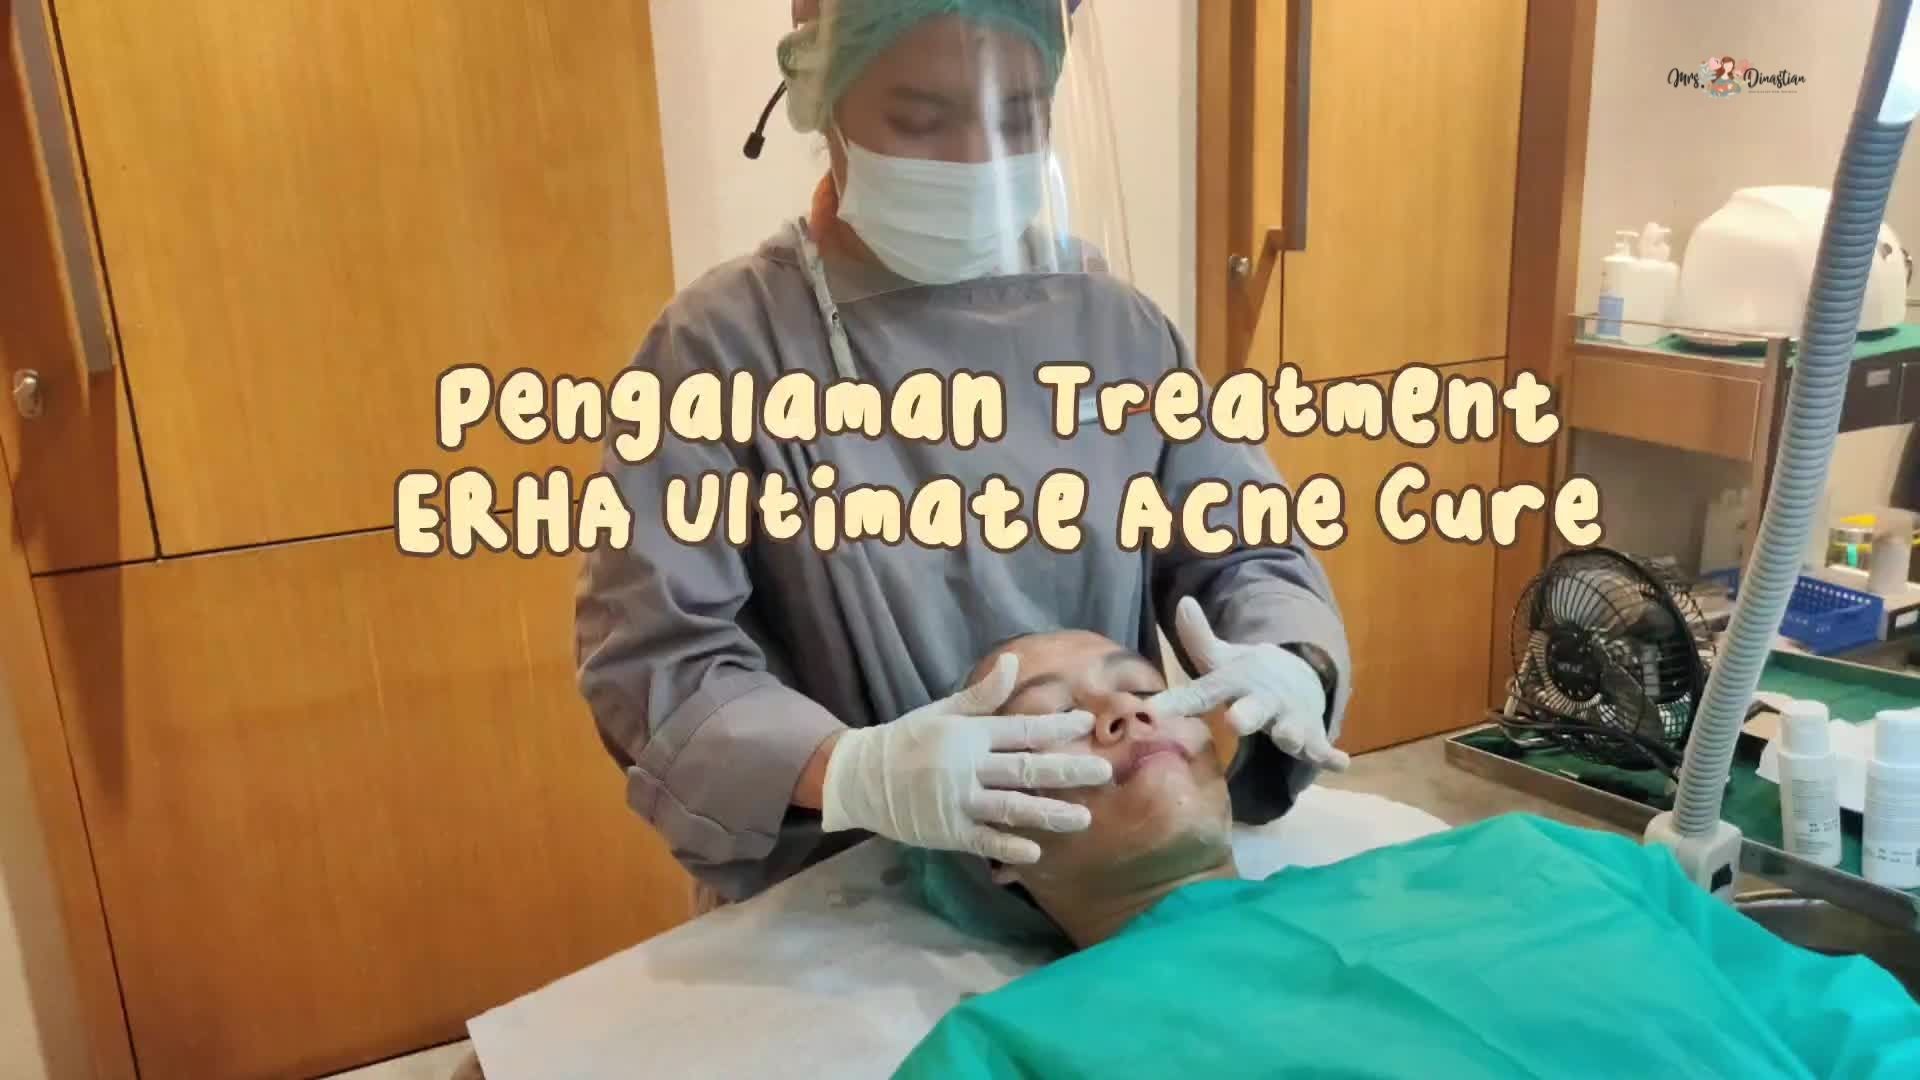 Treatment Erha Ultimate Acne Cure